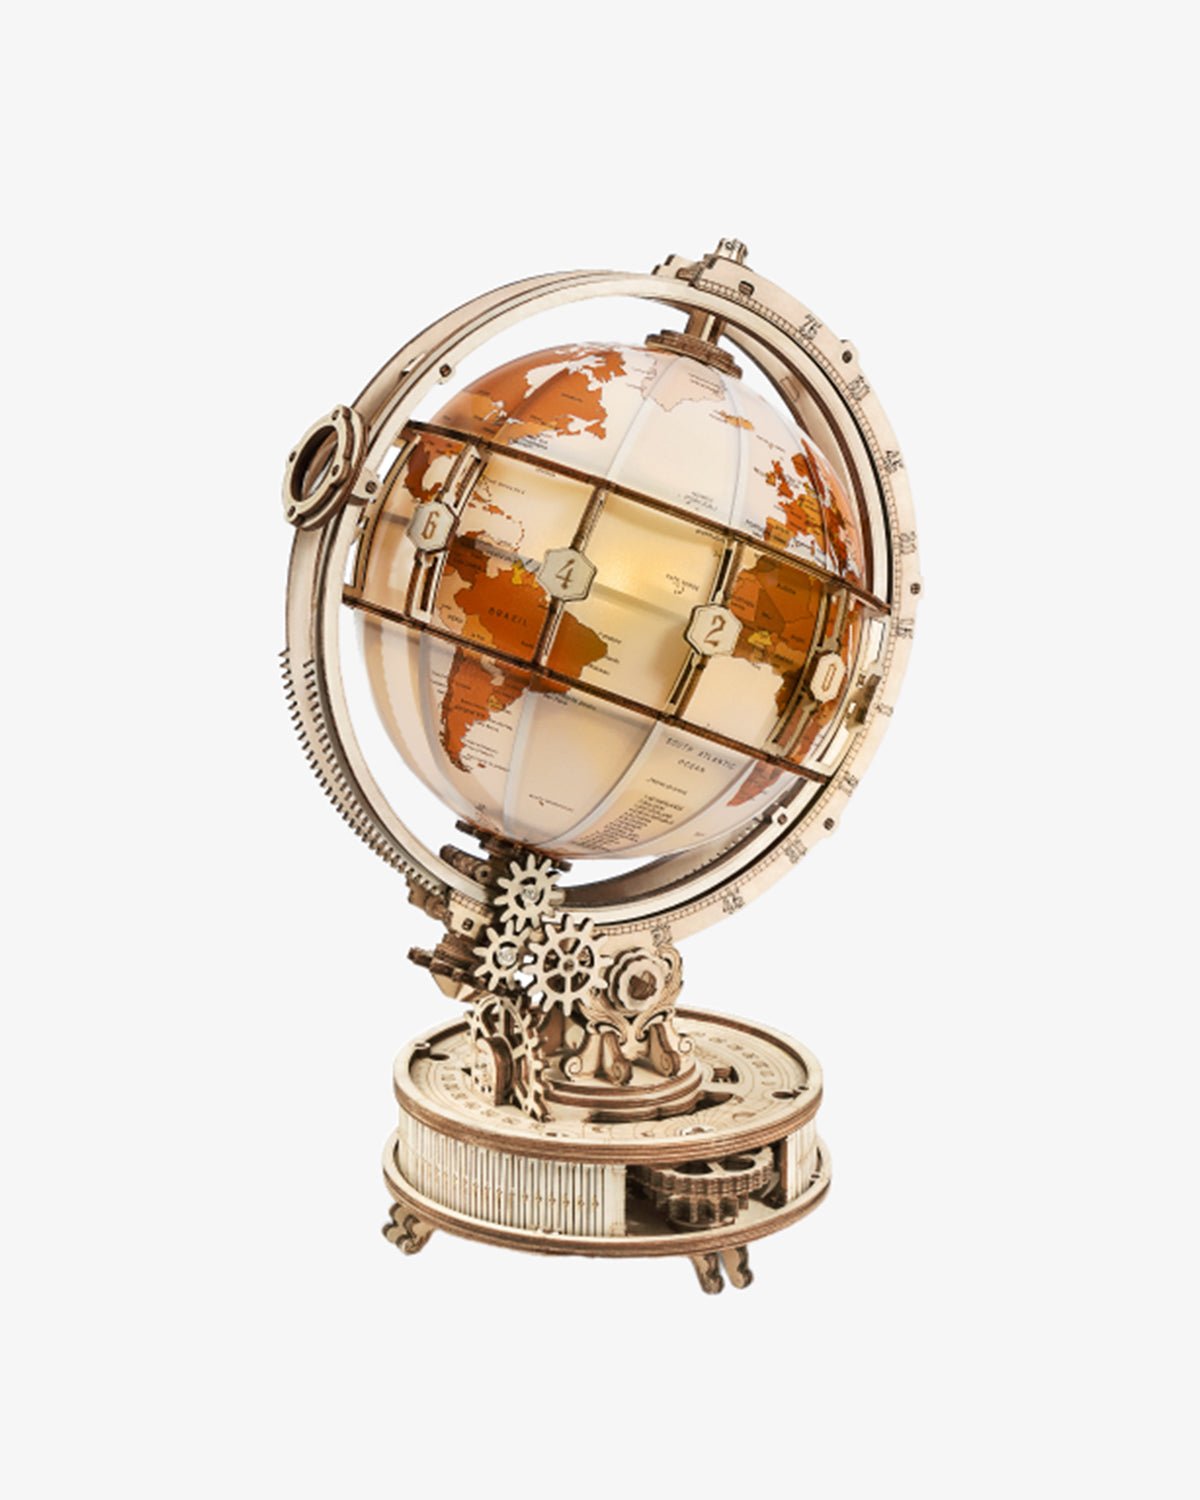 Illuminated Globe of the World 3D Wooden Puzzle